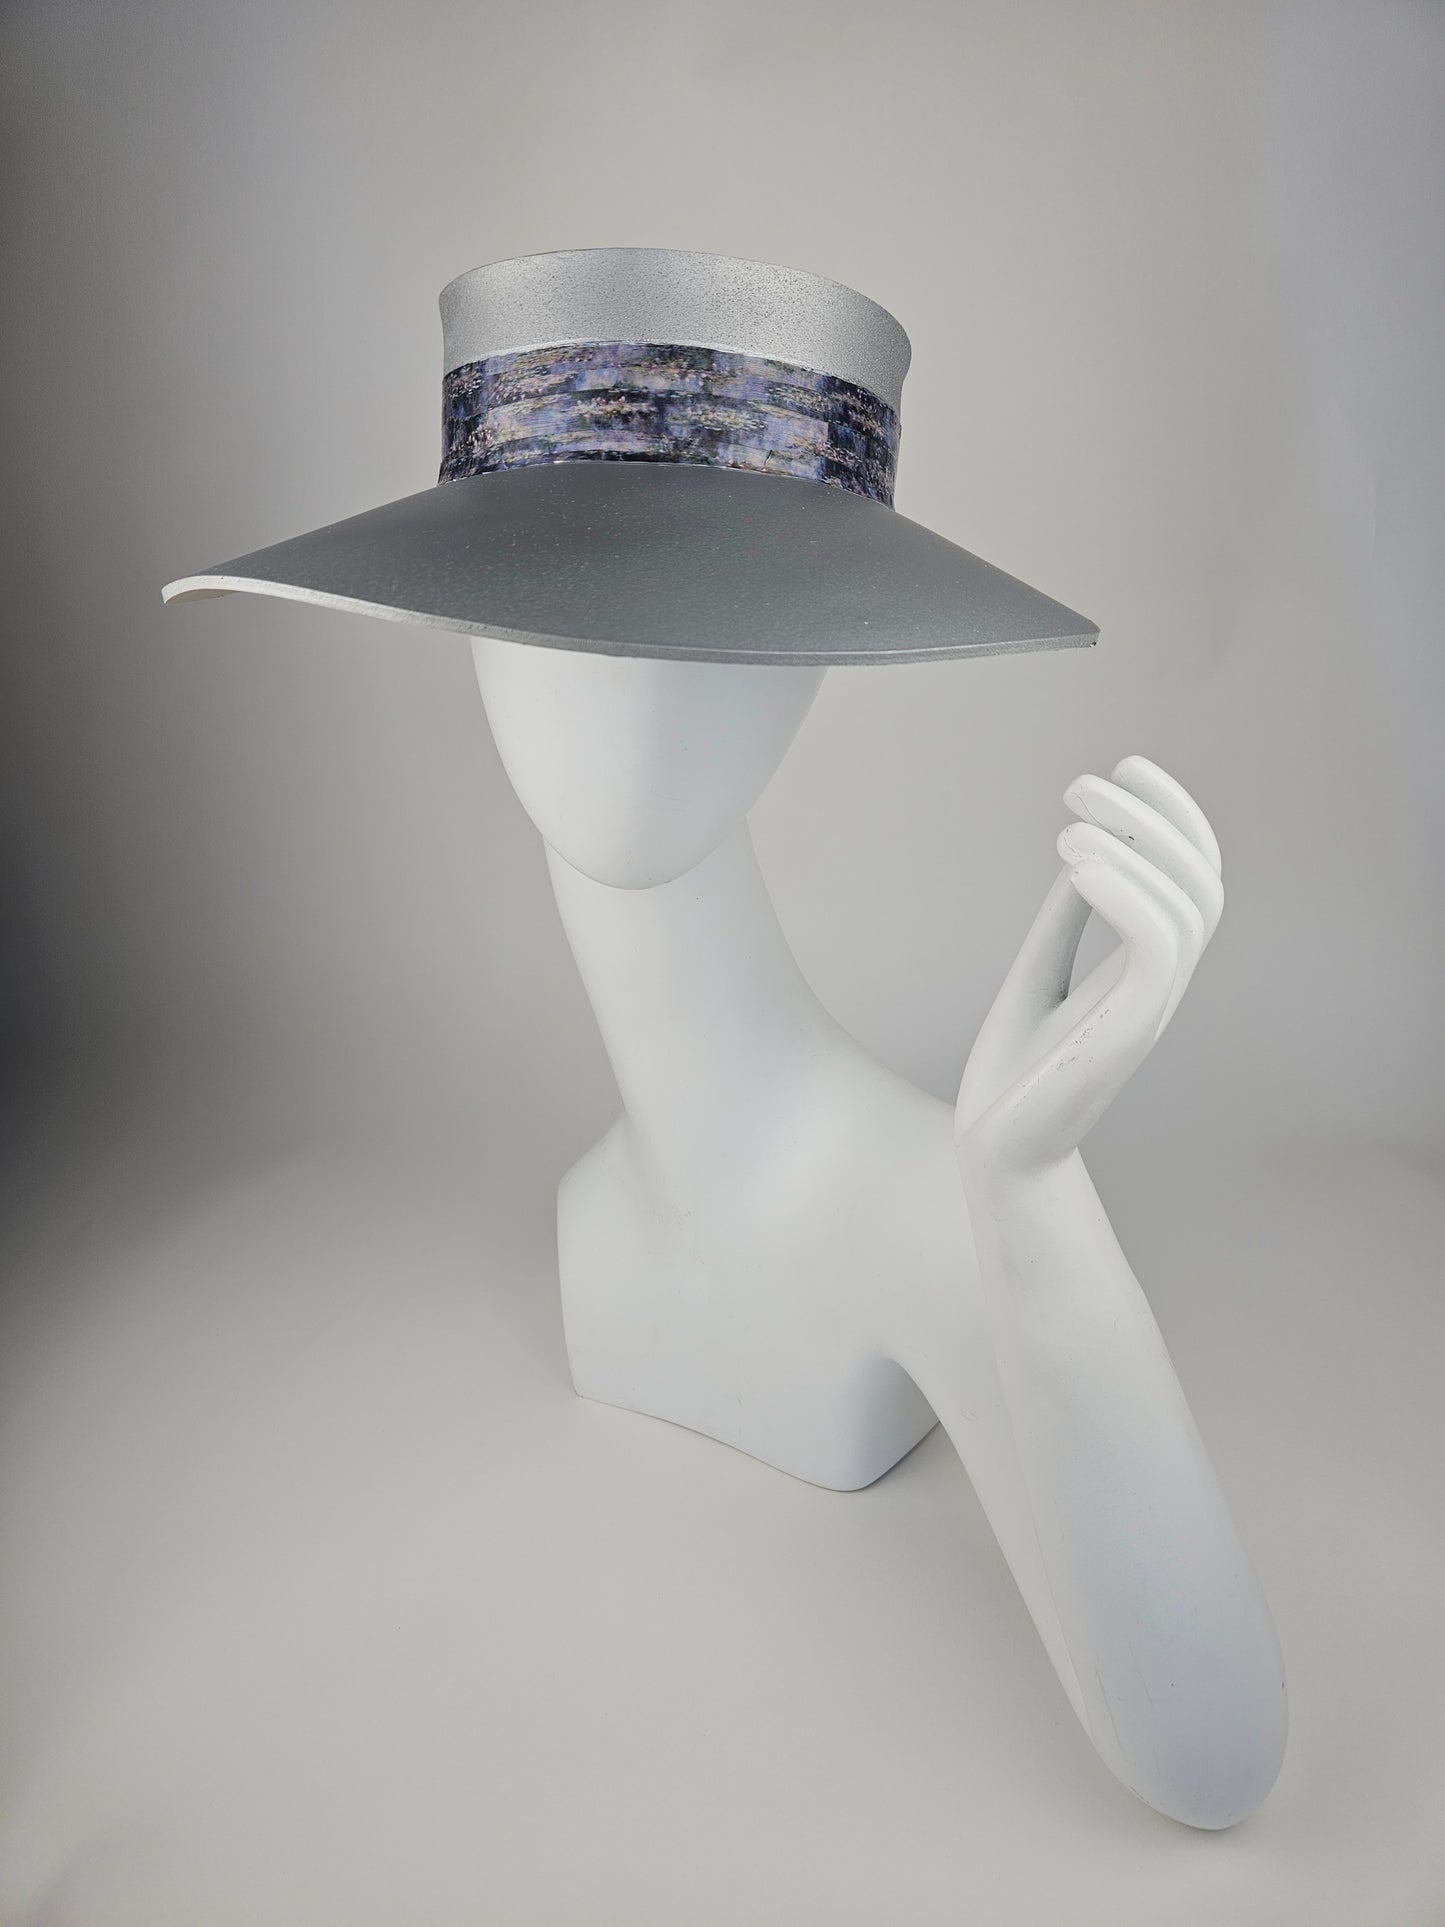 Trending Silver Audrey Sun Visor Hat with Lavender Monet Style Band: 1950s, Walks, Brunch, Asian, Golf, Summer, Church, No Headache, Pool, Beach